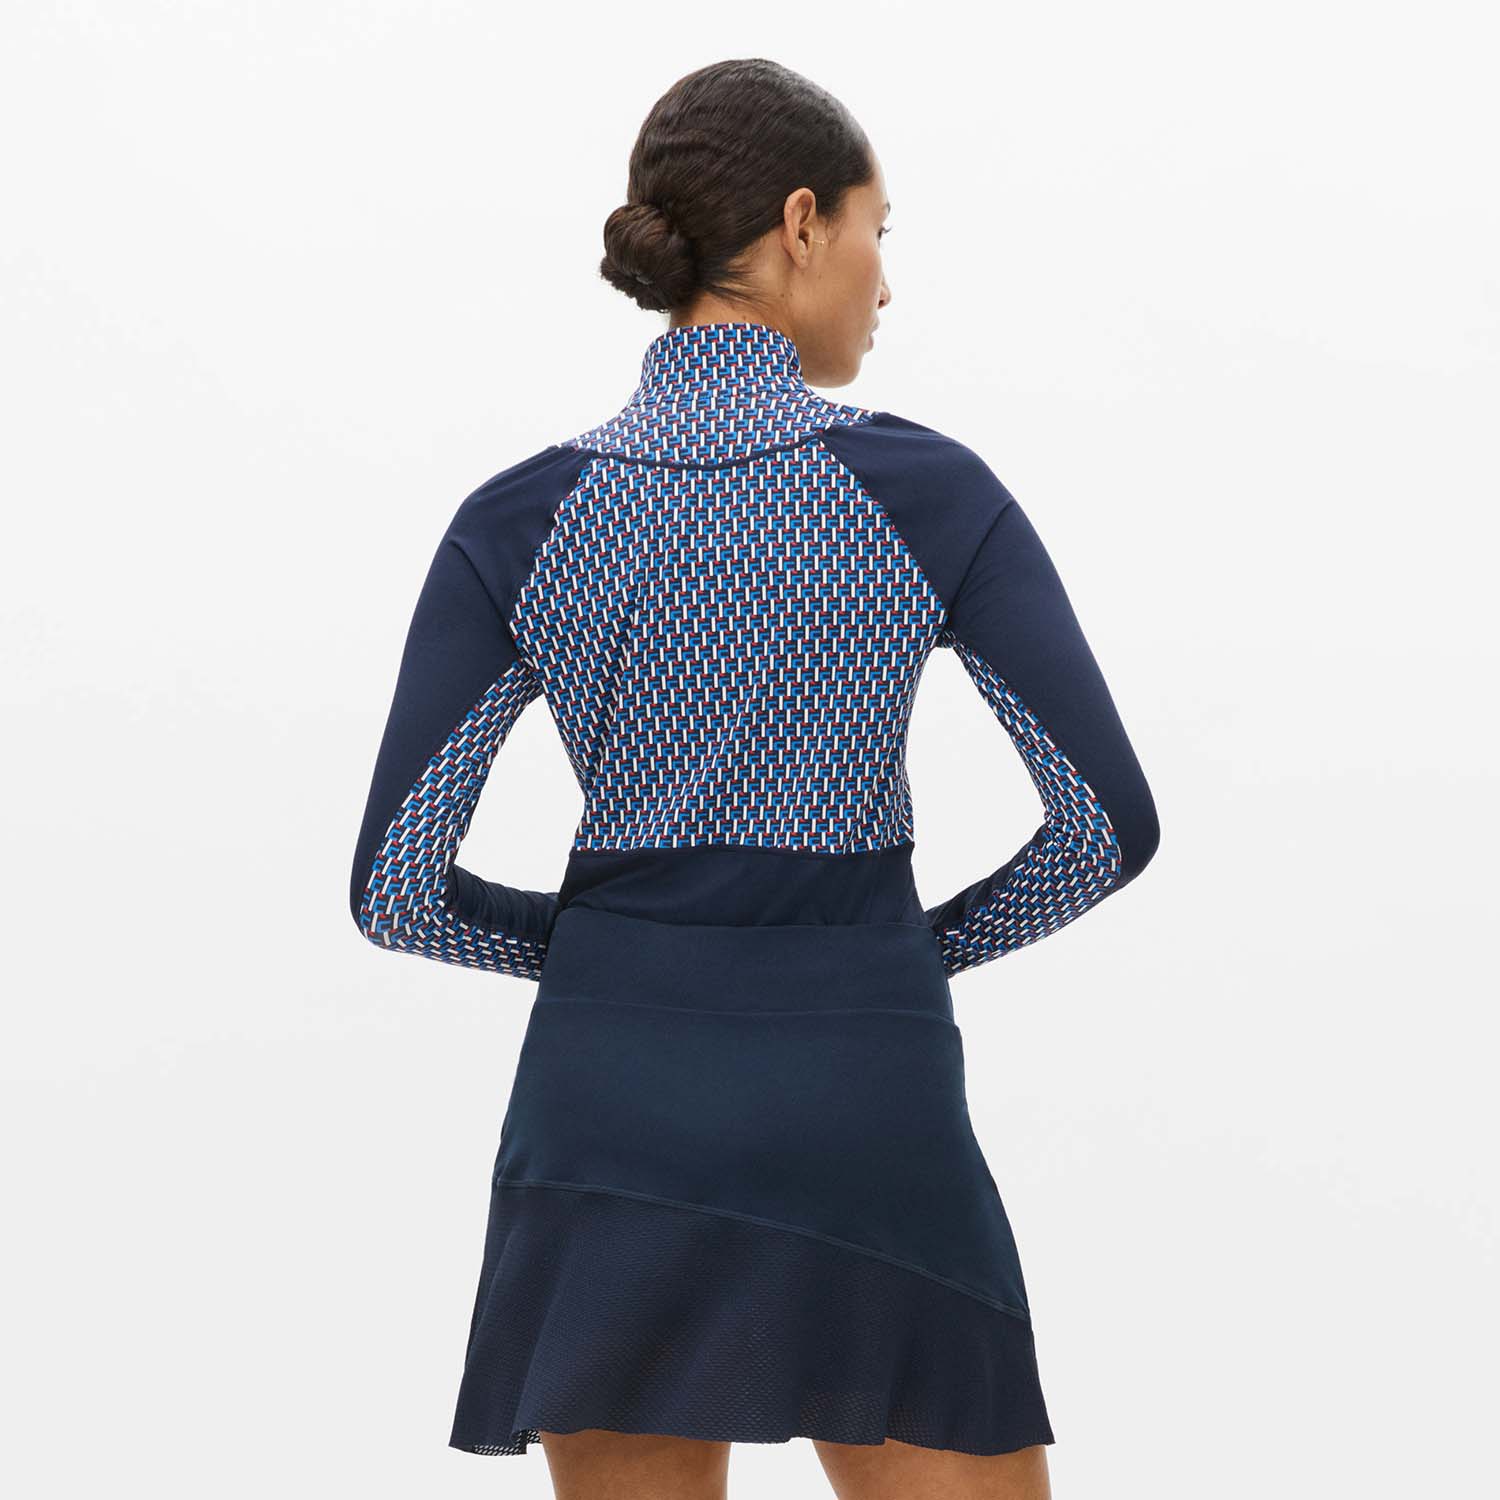 Rohnisch Ladies Long Sleeve Top with Printed Panels in Logo Blue